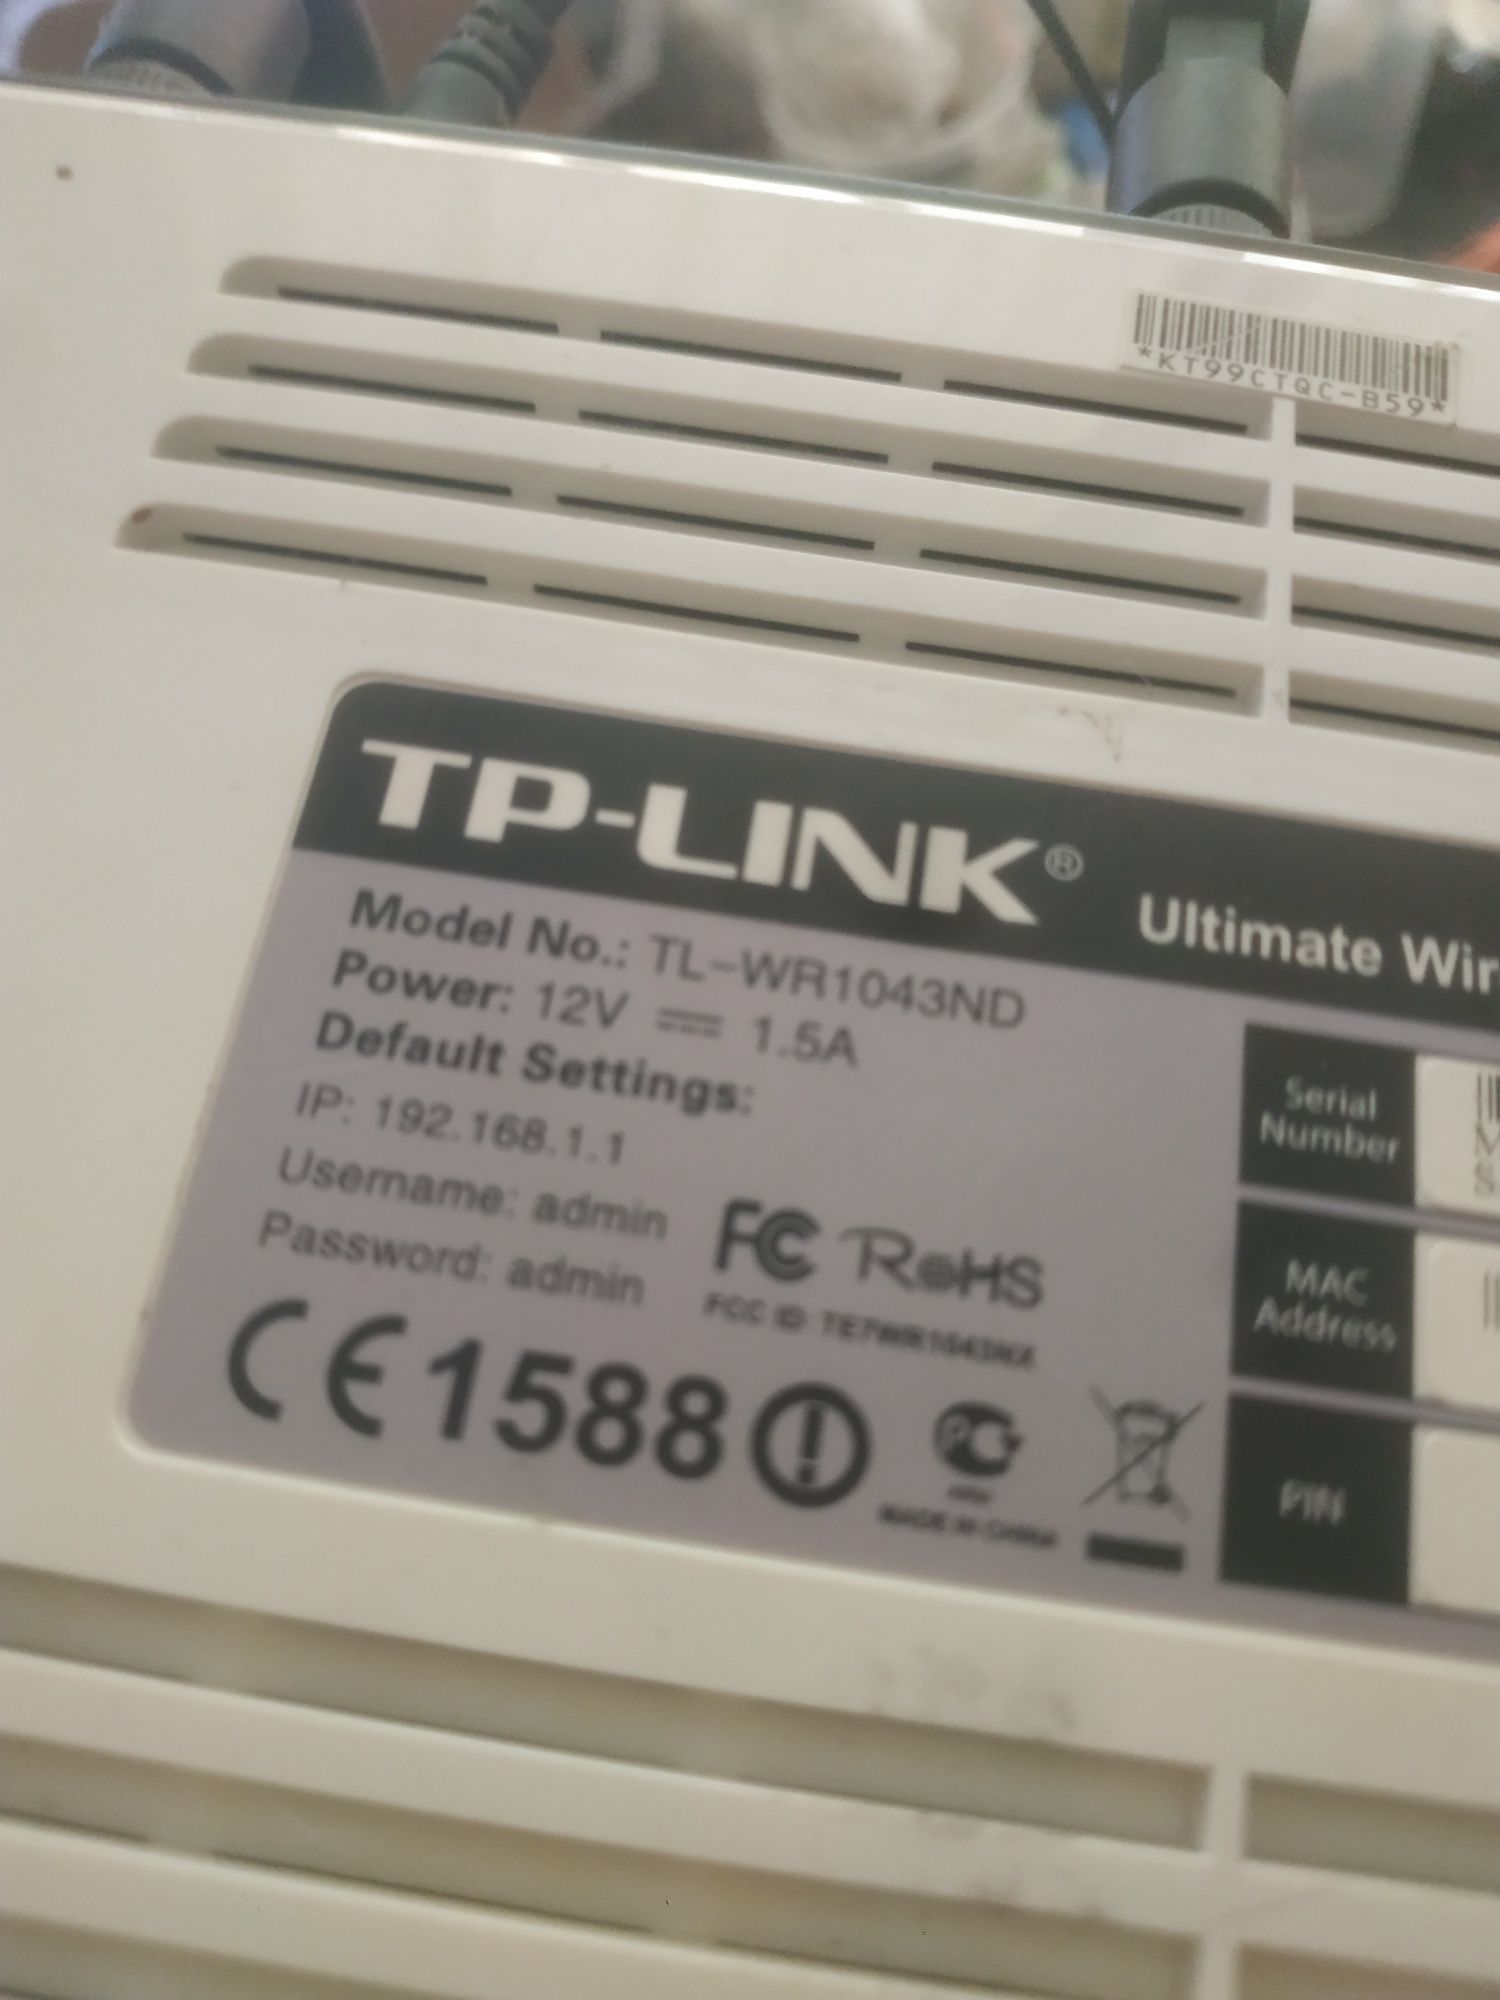 WiFi роутер TP-Link TL-WR1043ND прошивка DdWrt